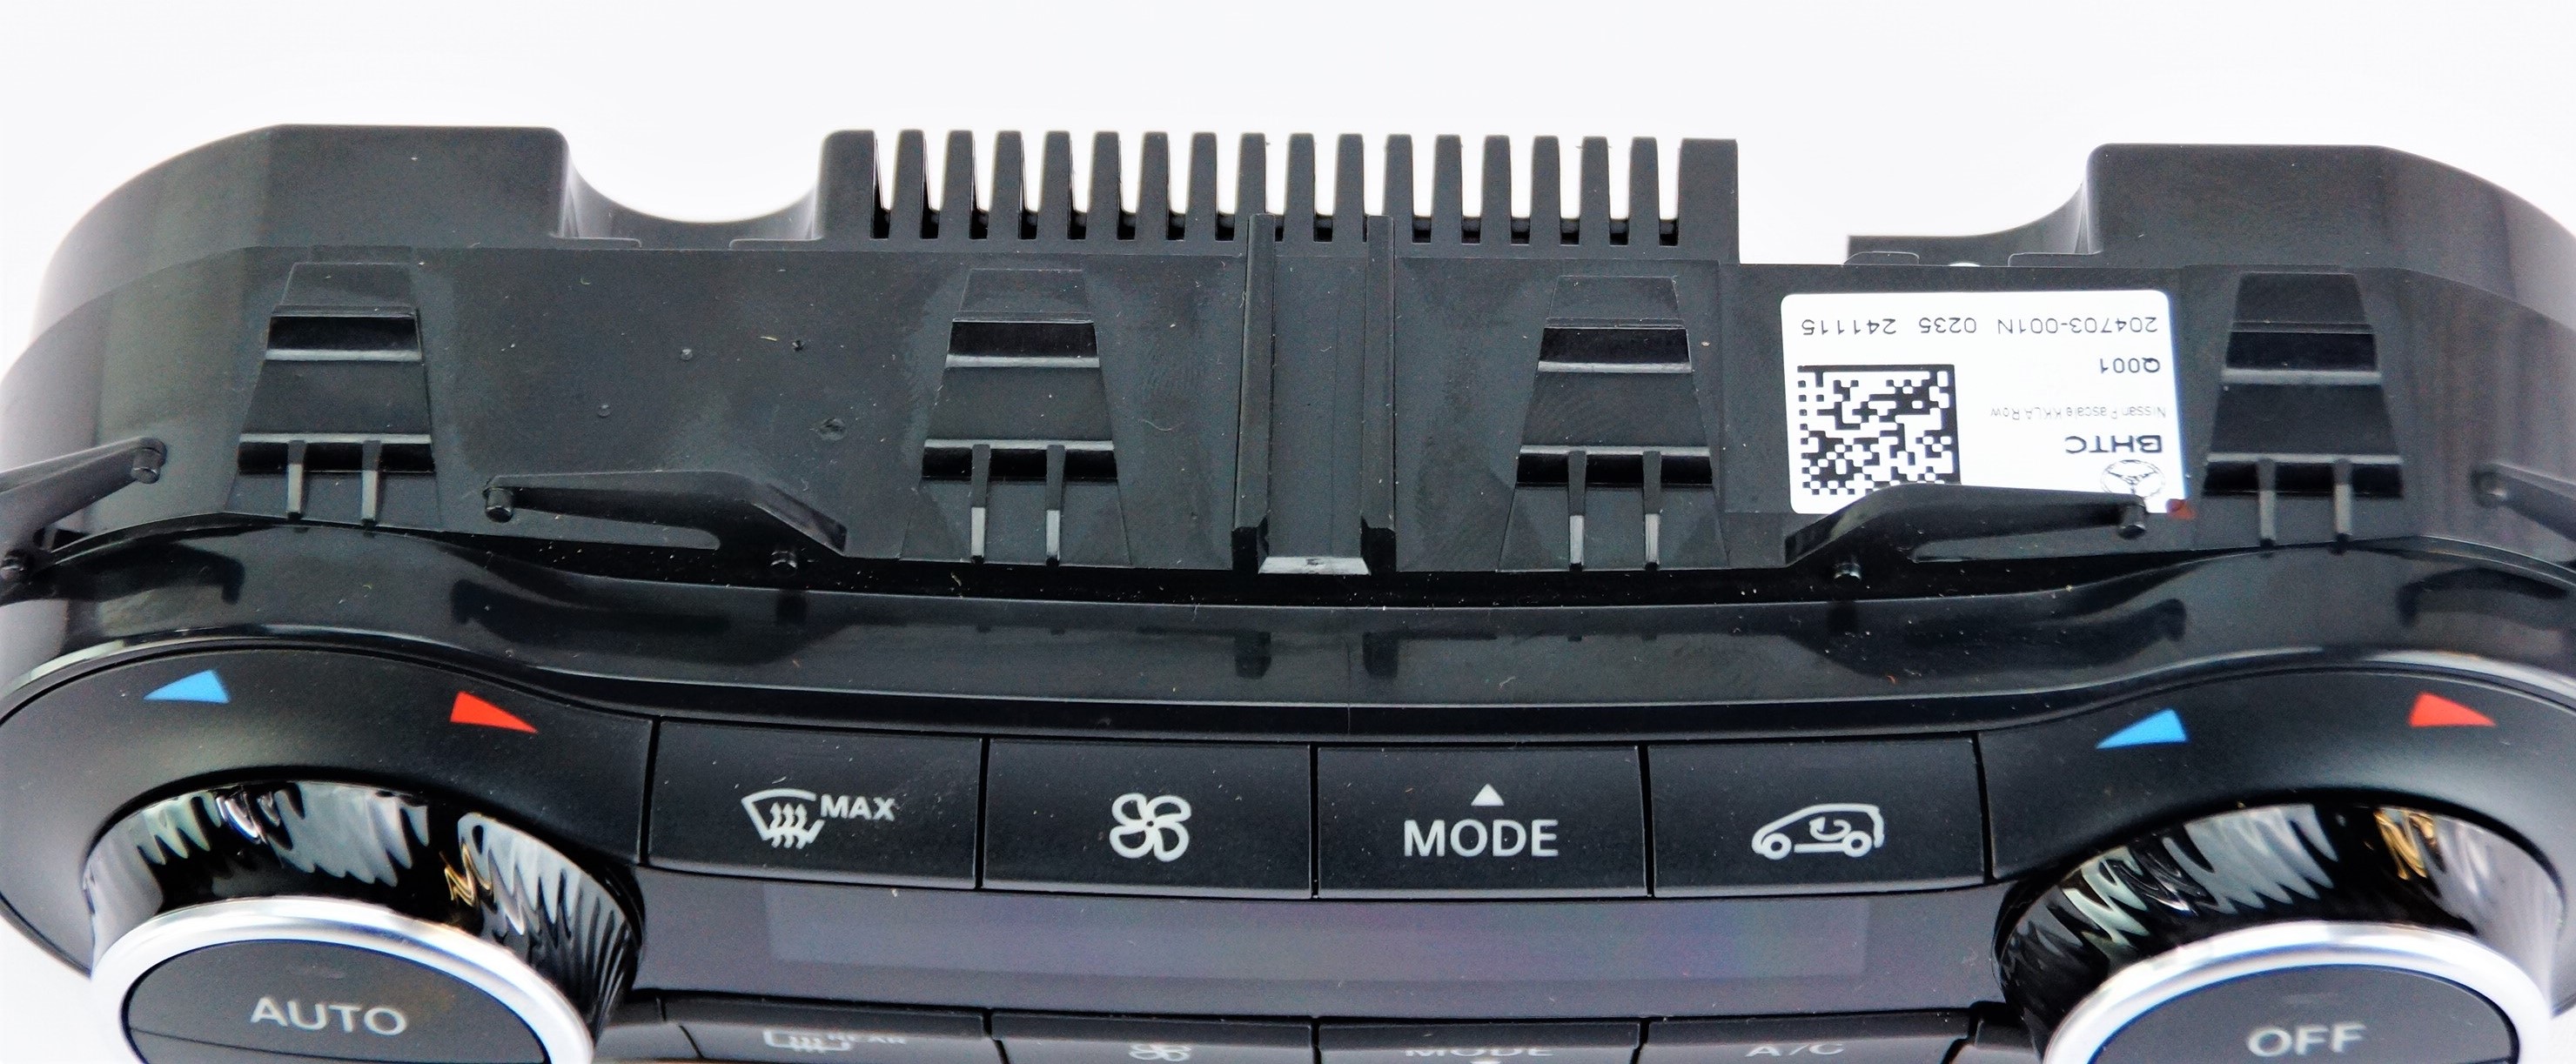 New Genuine OEM Nissan 27500-5DC0C HVAC Temp Control Panel Infiniti QX30 - image 6